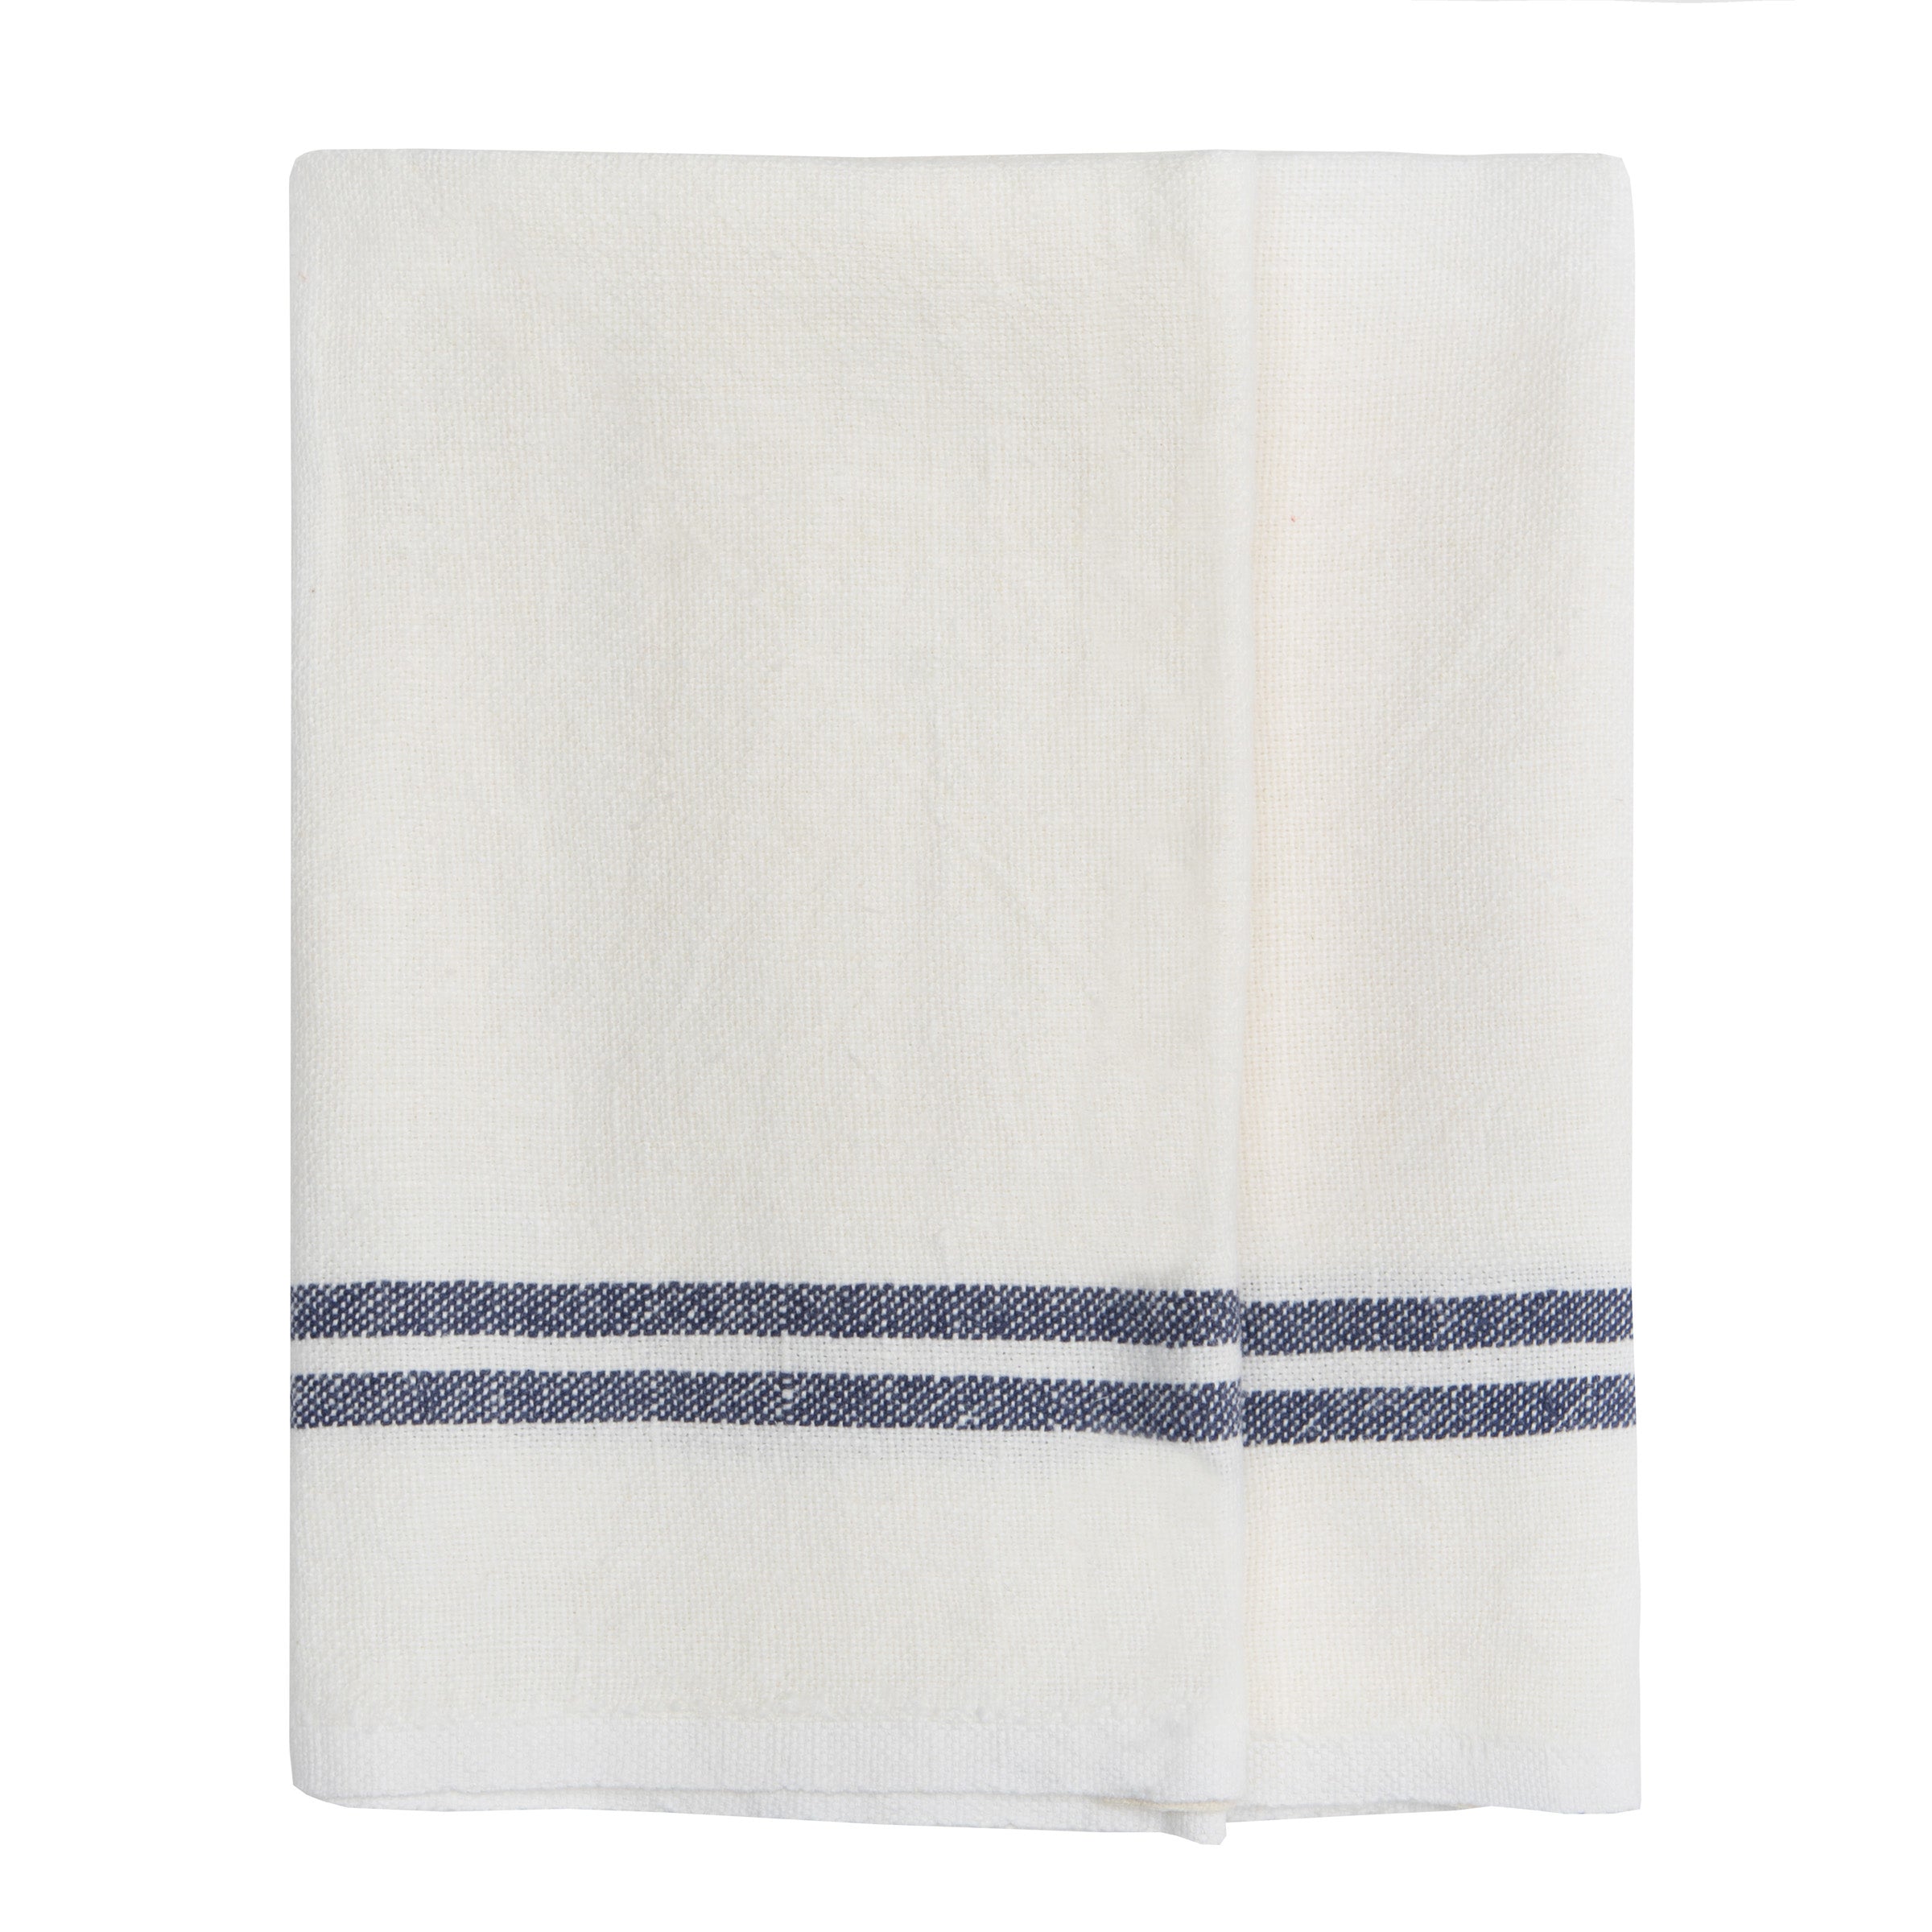 Natural Linen Bath Towels  Back 2 Linen – Back2Linen